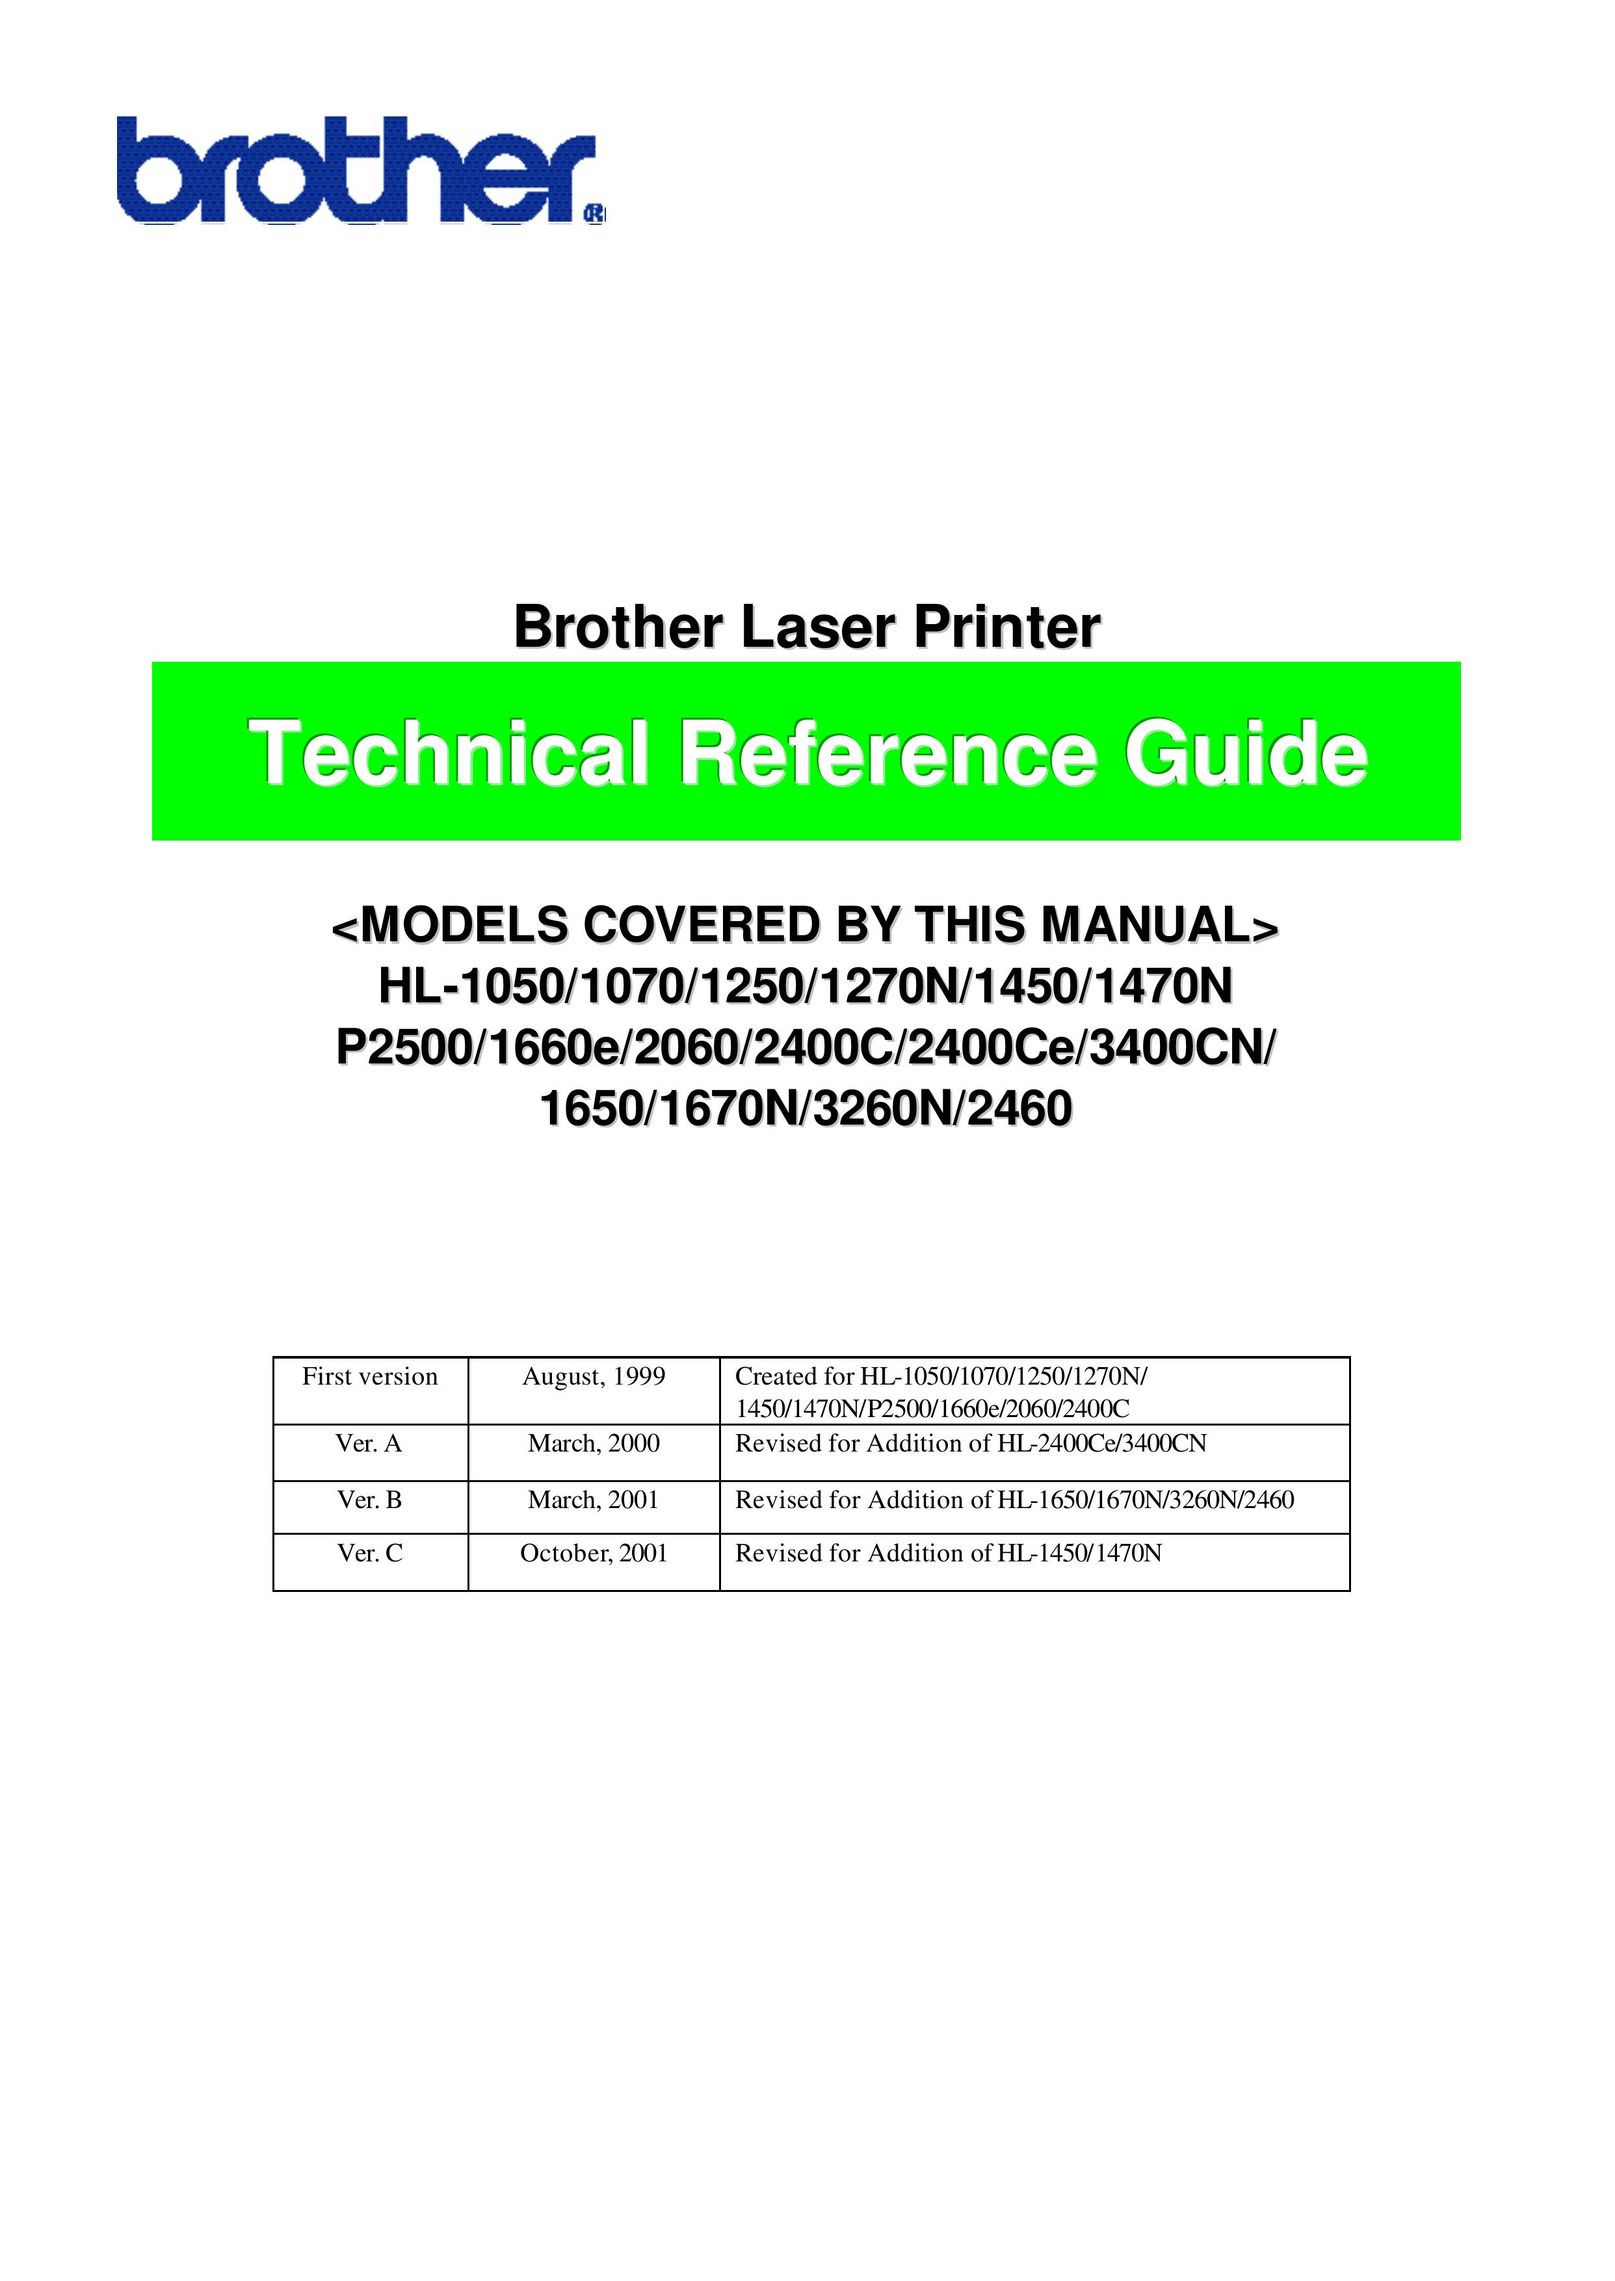 Brother 1660e Printer User Manual